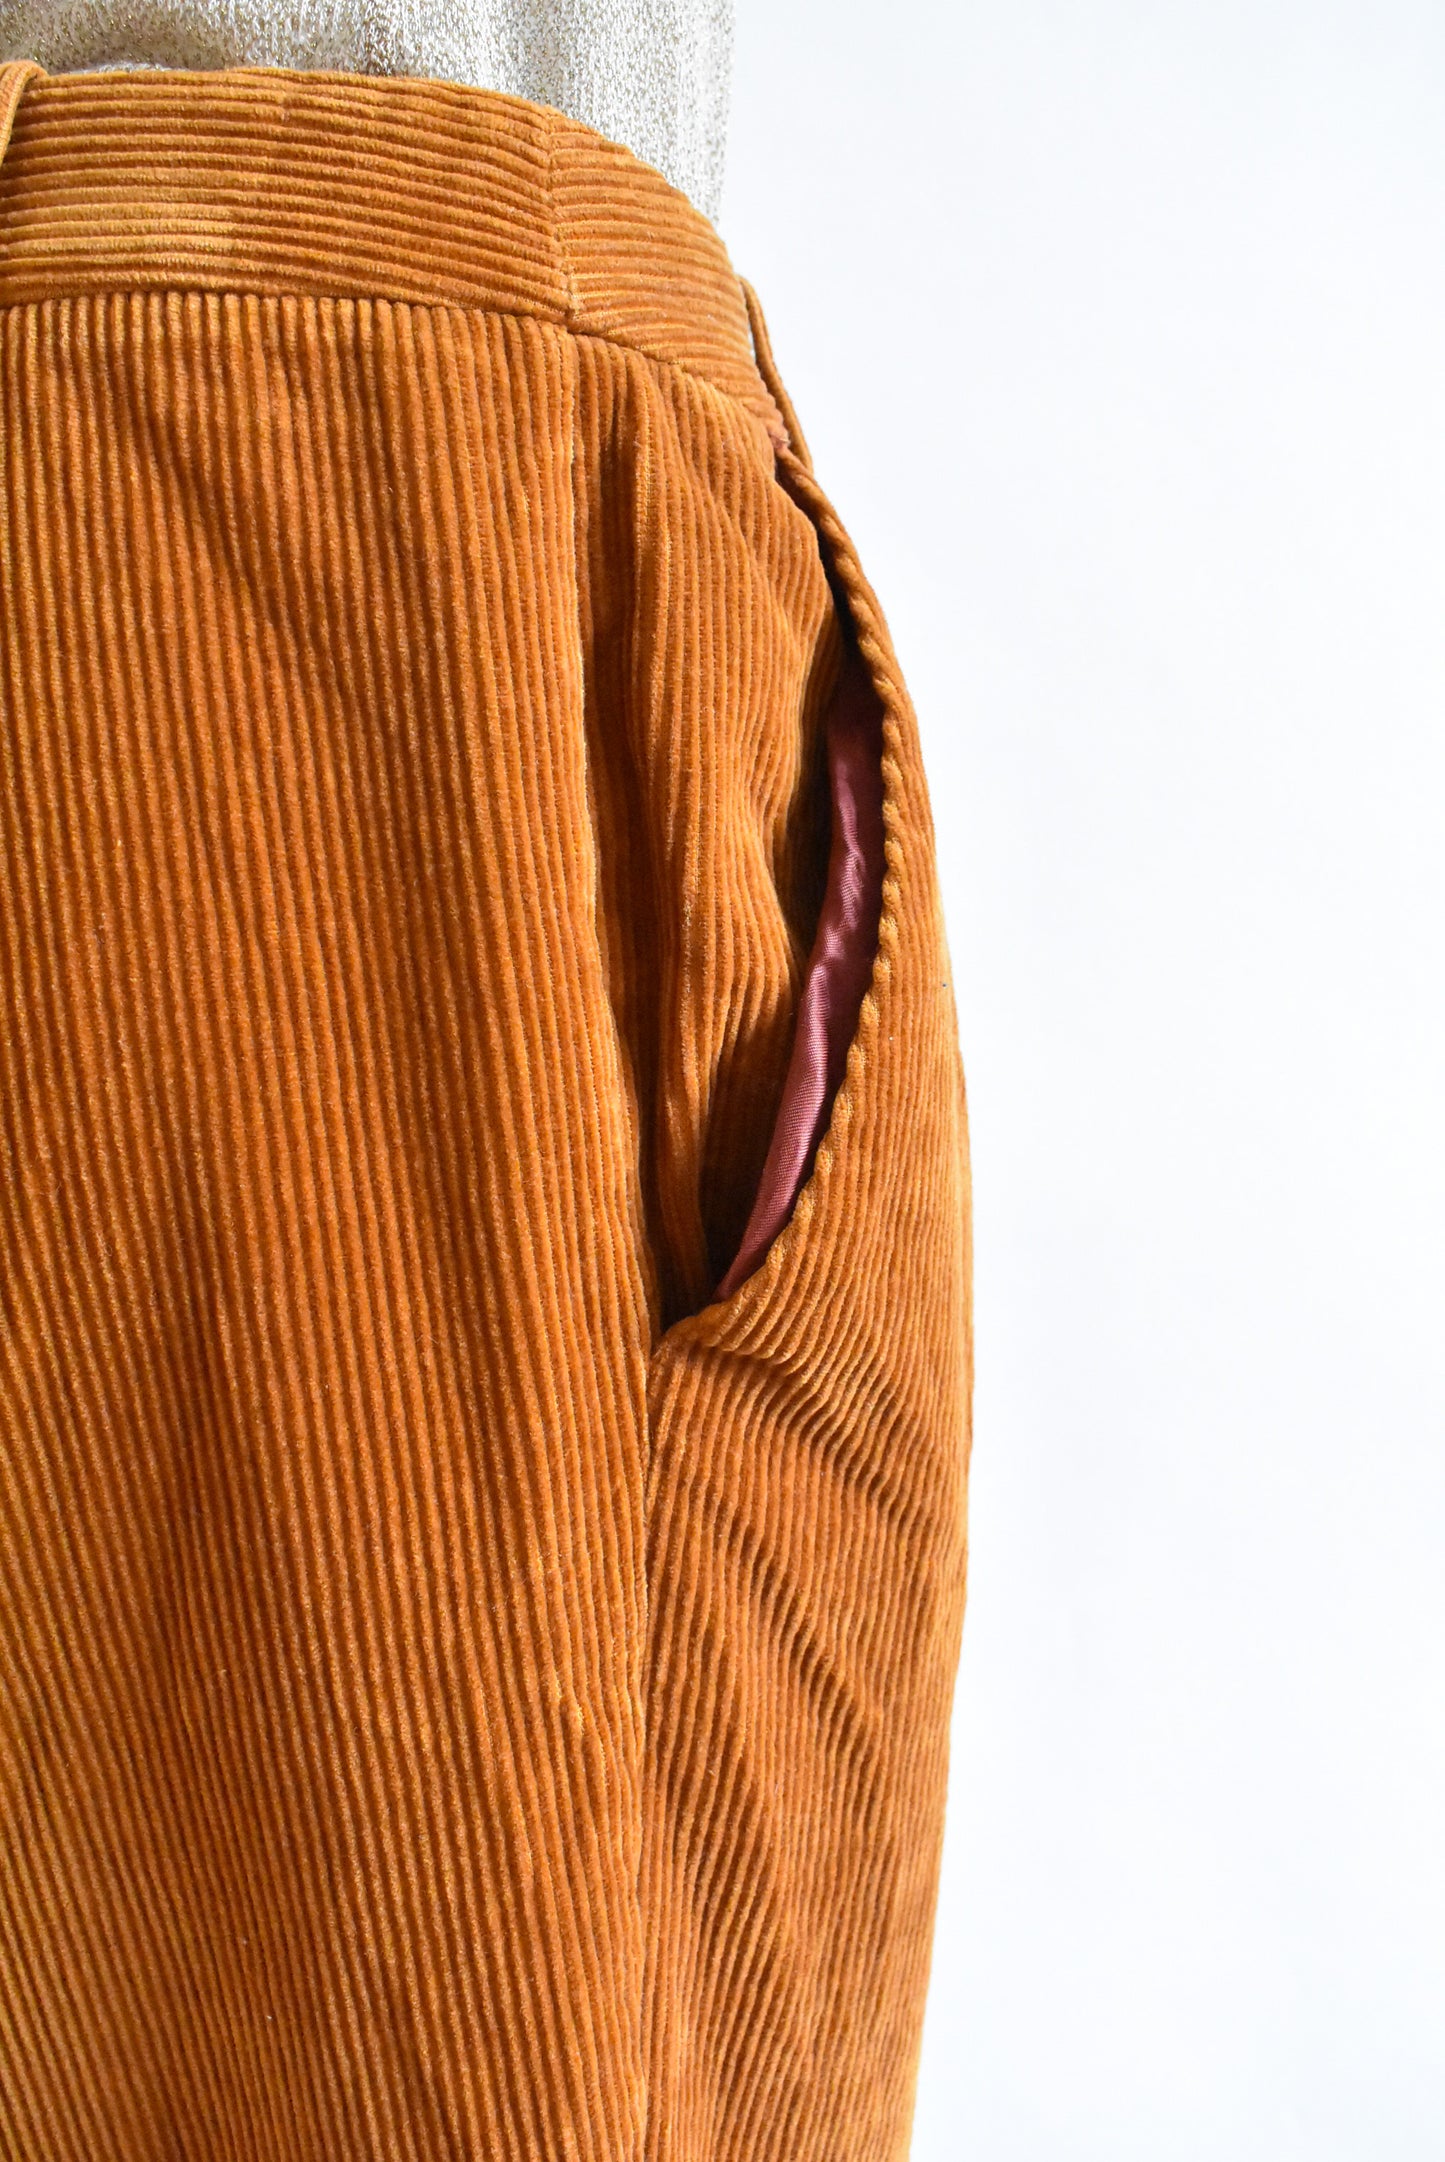 Vera Ravenna ginger corduroy pants, size 10